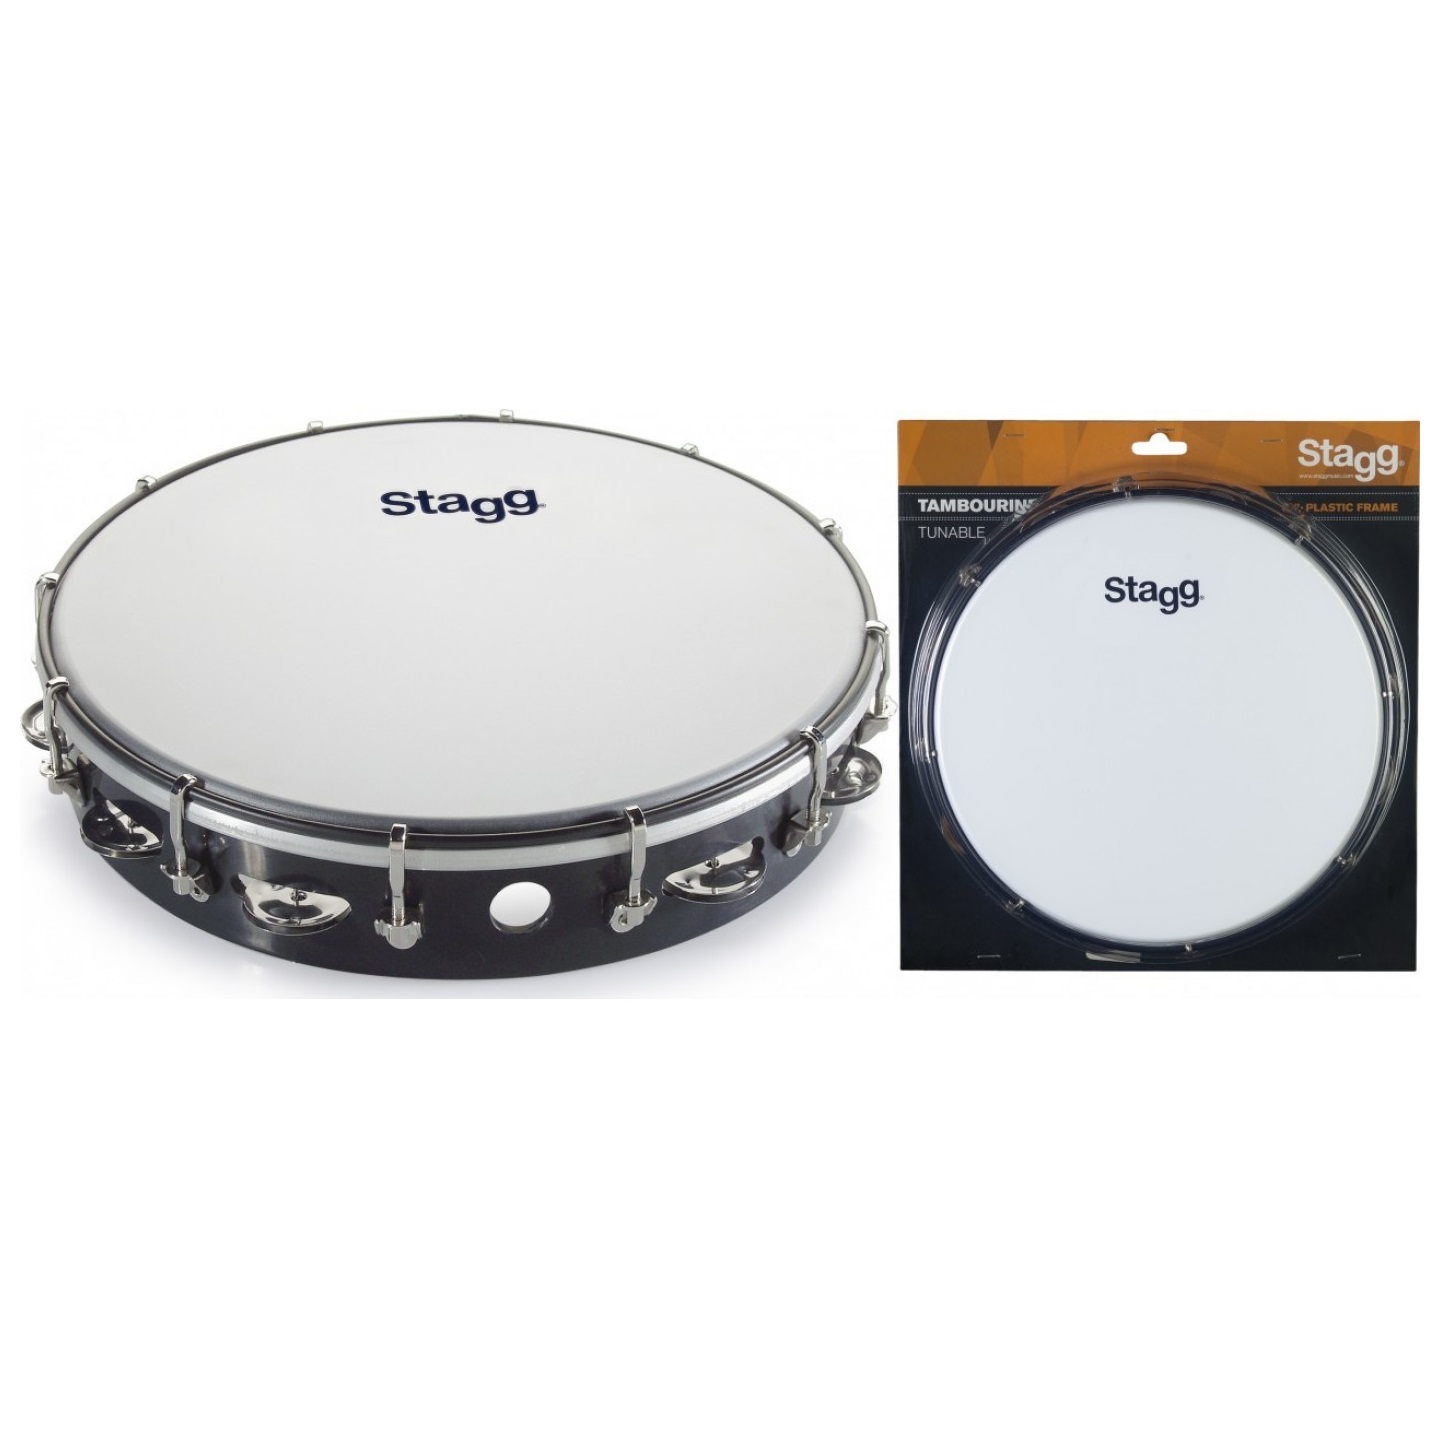 Stagg Tunable Tambourine 12 inch - Blak Plastic Frame, TAB-112P/BK